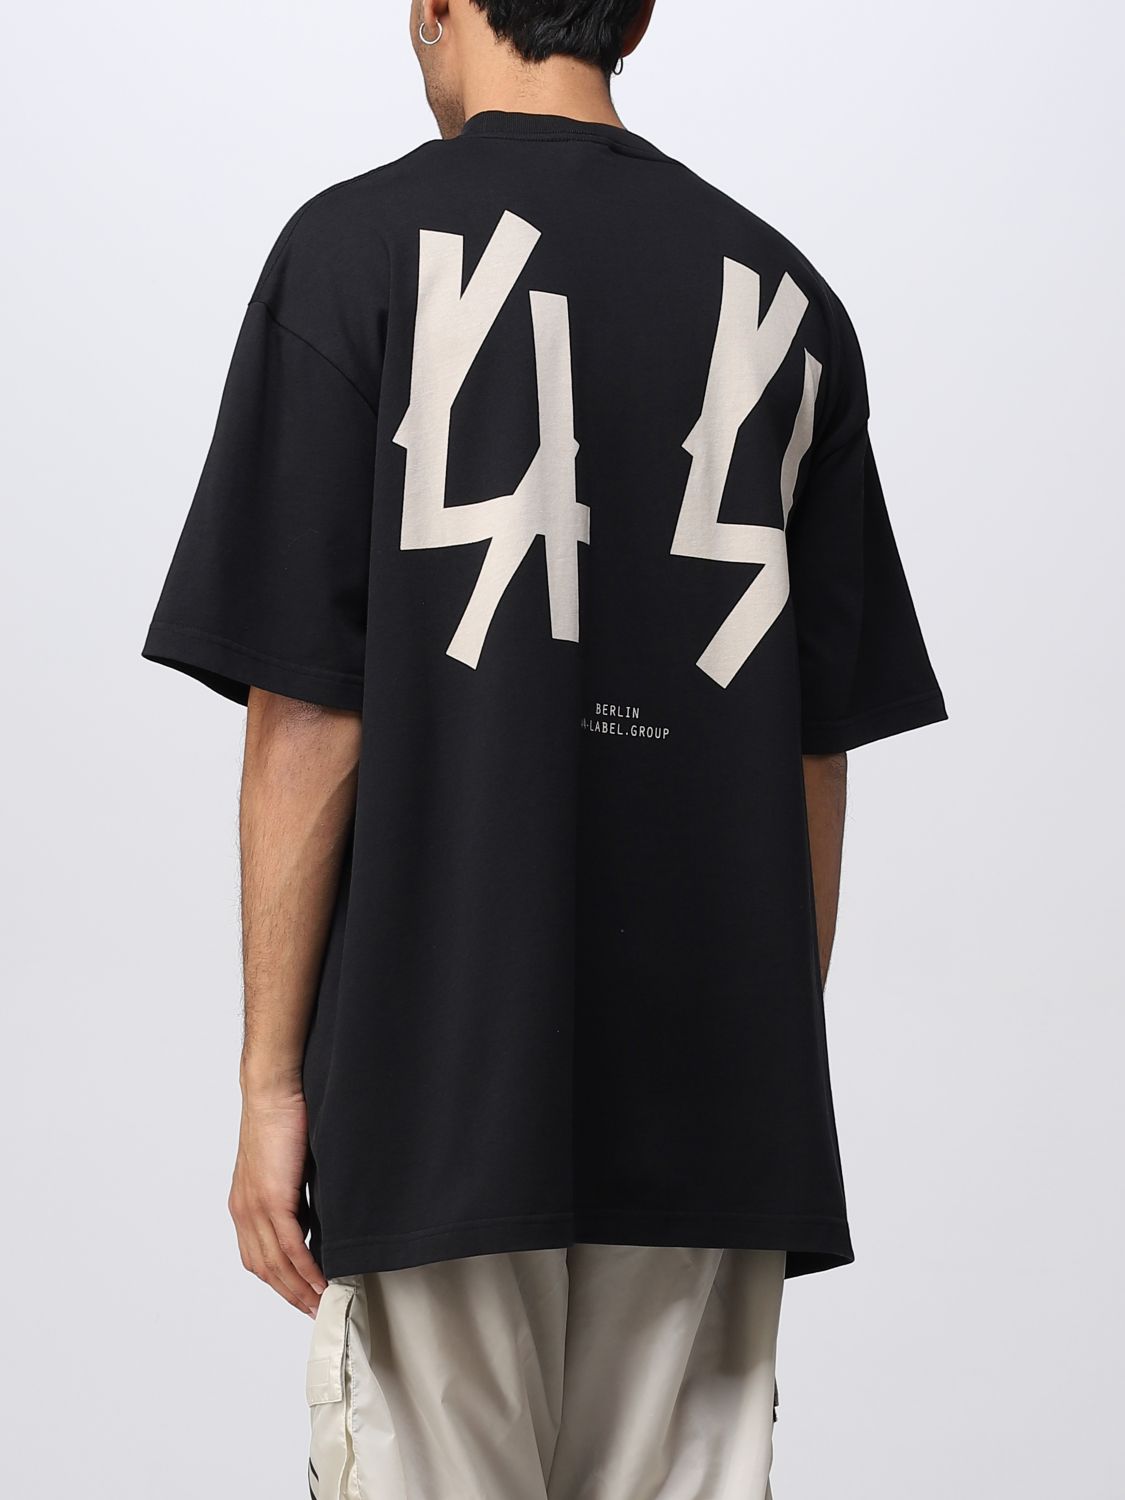 44 LABEL GROUP: t-shirt for man - Black | 44 Label Group t-shirt ...